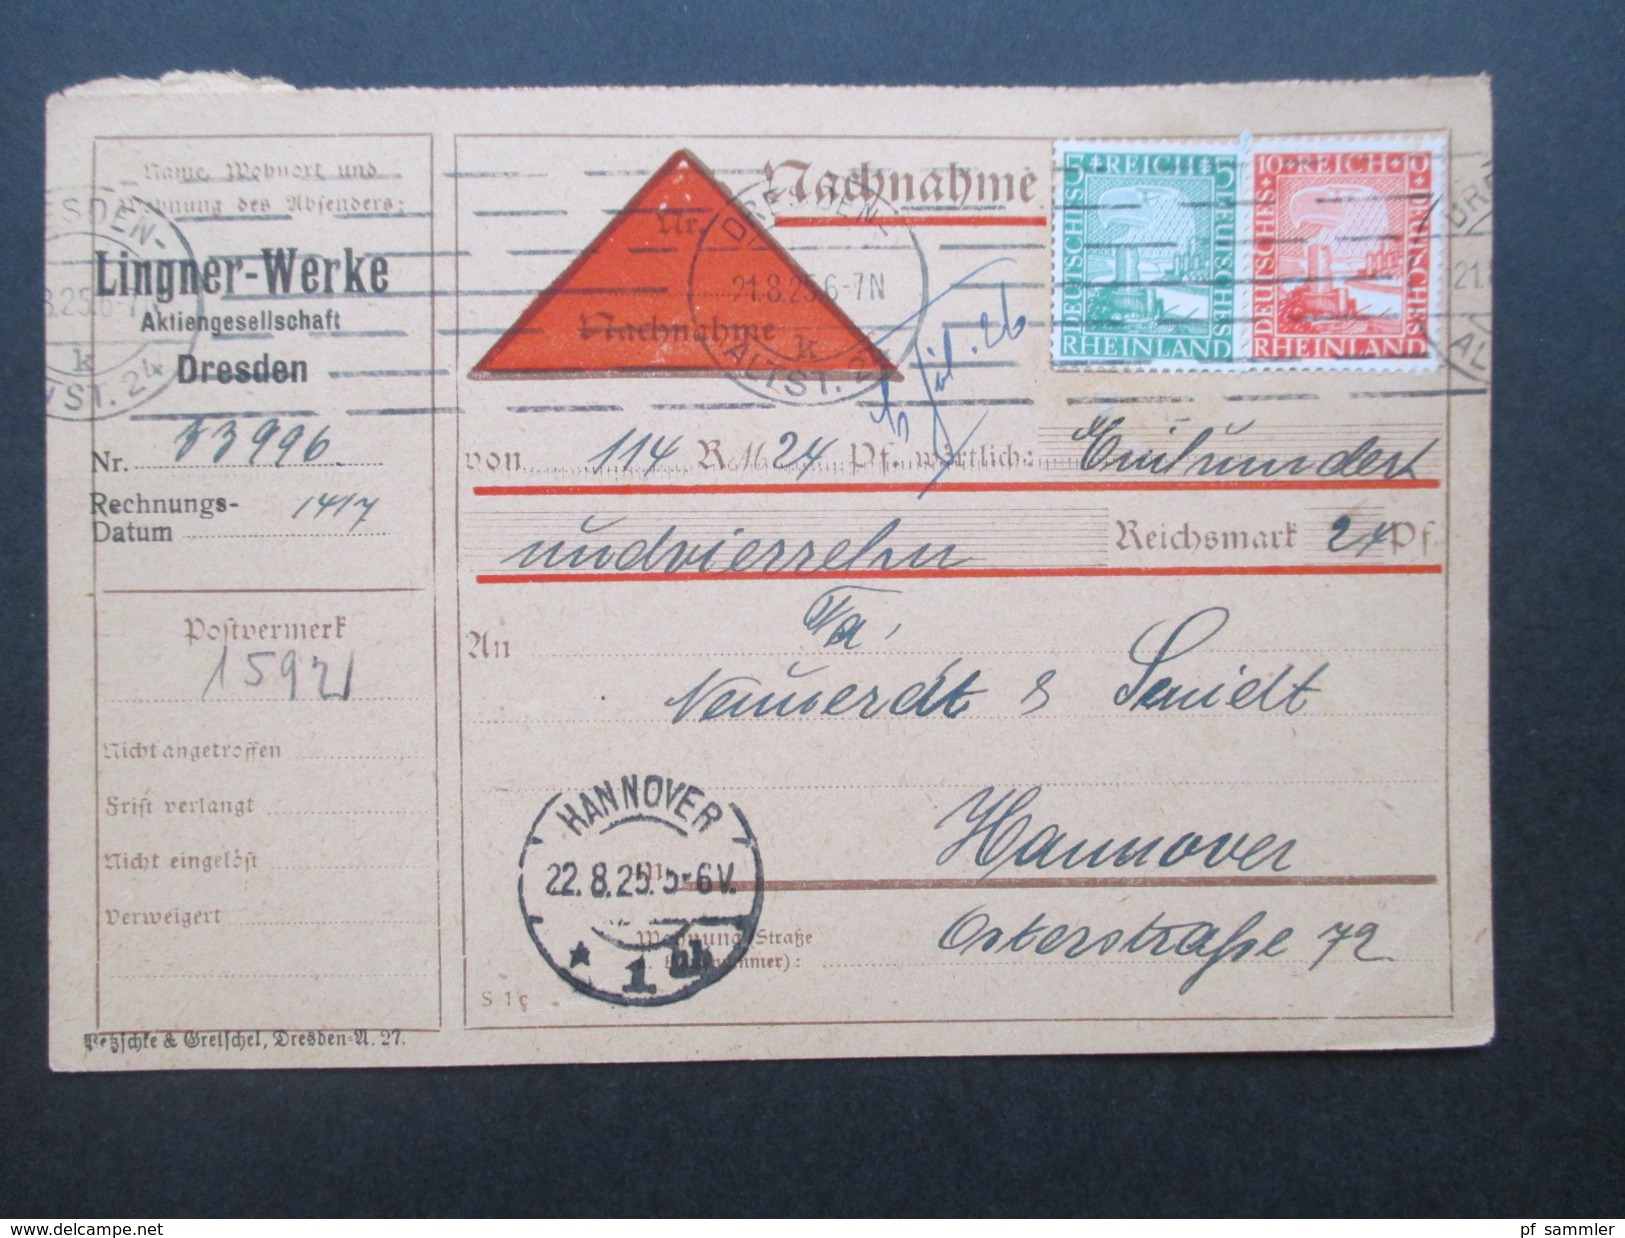 DR 1925 Nachnahme Karte über 114 Mark. Lingner Werke Aktiengesellschaft Dresden. - Briefe U. Dokumente